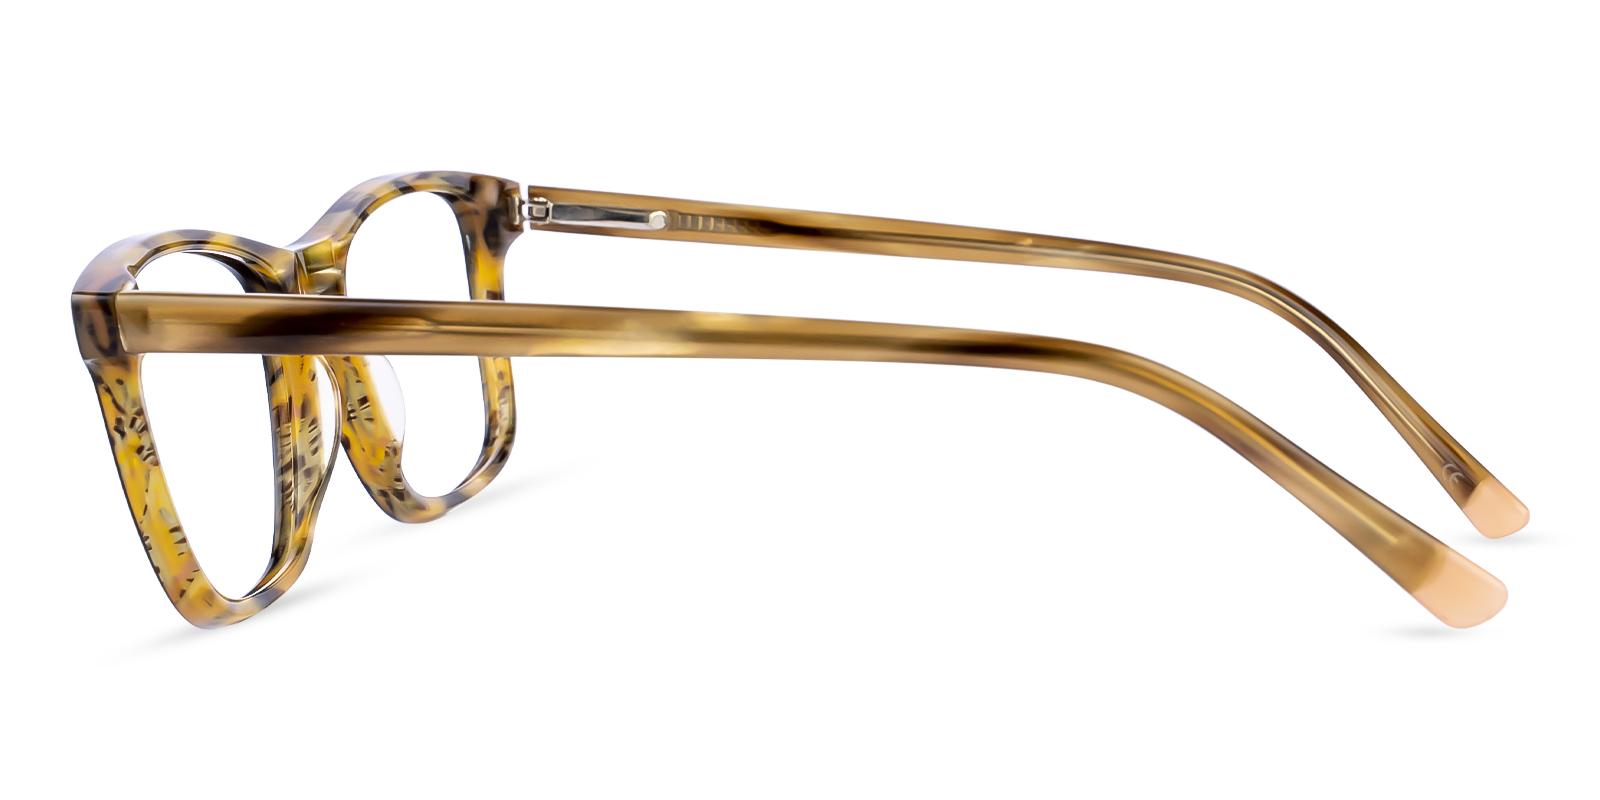 Gilcres Striped Acetate Eyeglasses , SpringHinges , UniversalBridgeFit Frames from ABBE Glasses